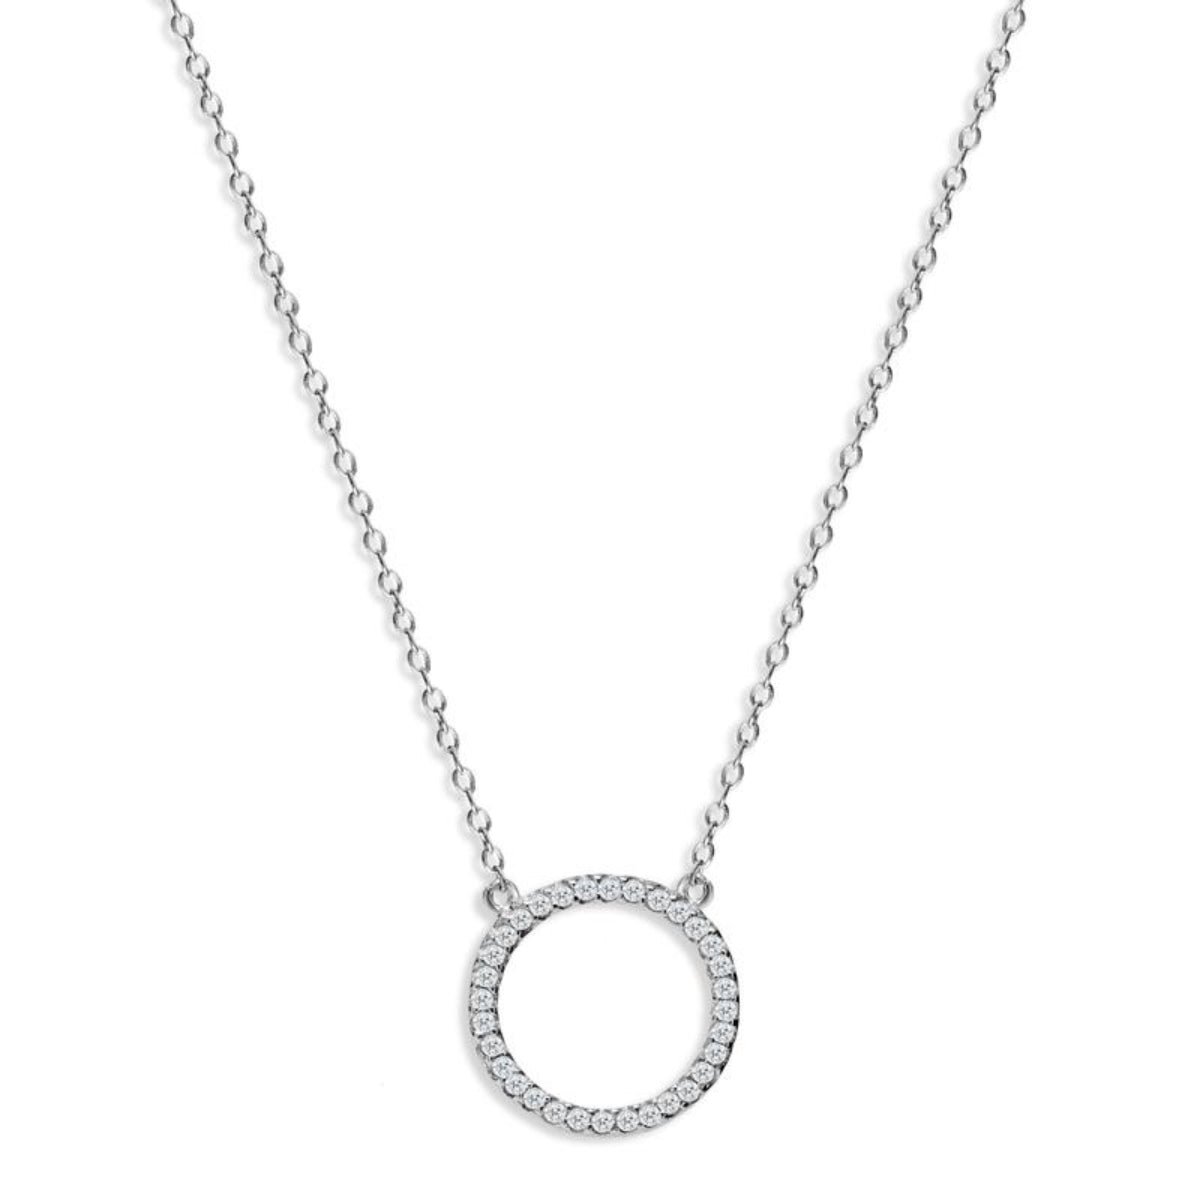 Silver Kingsbury Halo Necklace with Cubic Zirconia - Lulu B Jewellery